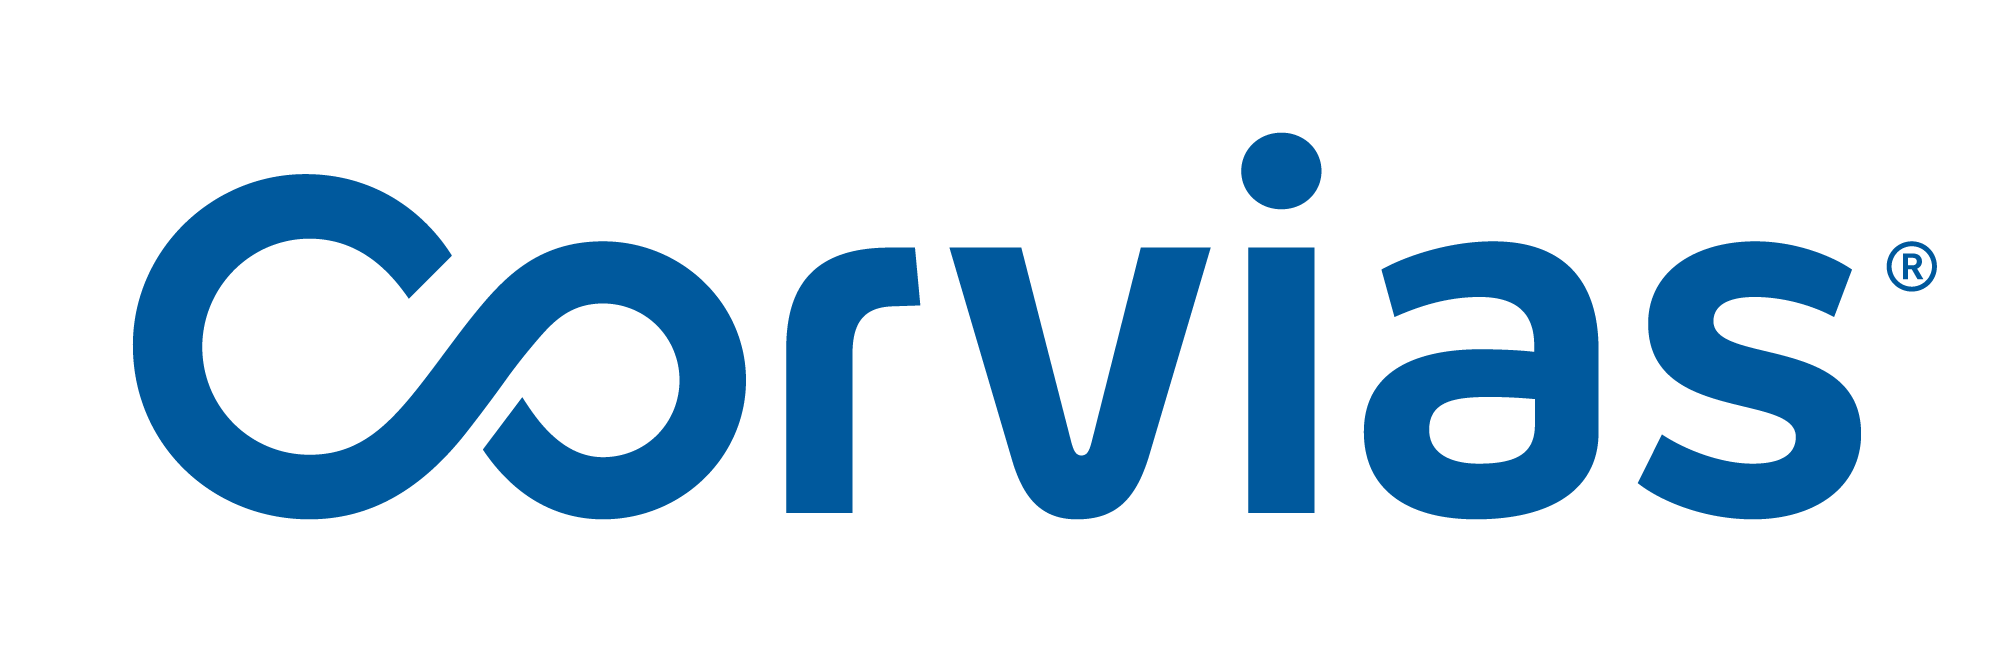 Corvias Logo.png